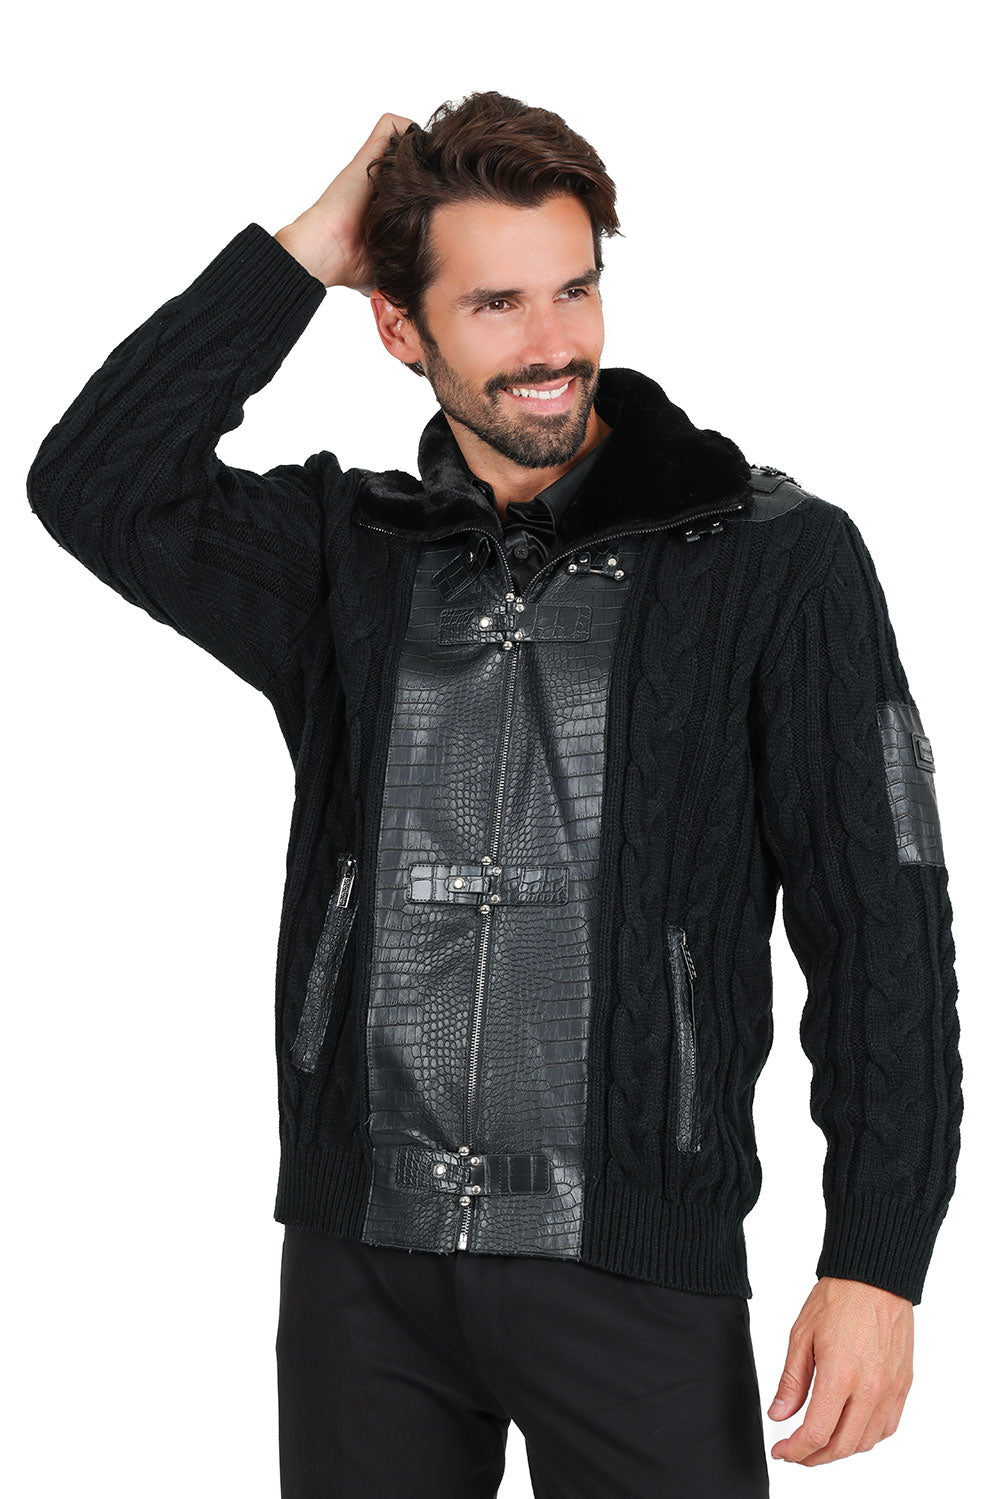 Barabas Men's Zipper Stand collar Animal Print Winter Jacket 2SWZ1 Black